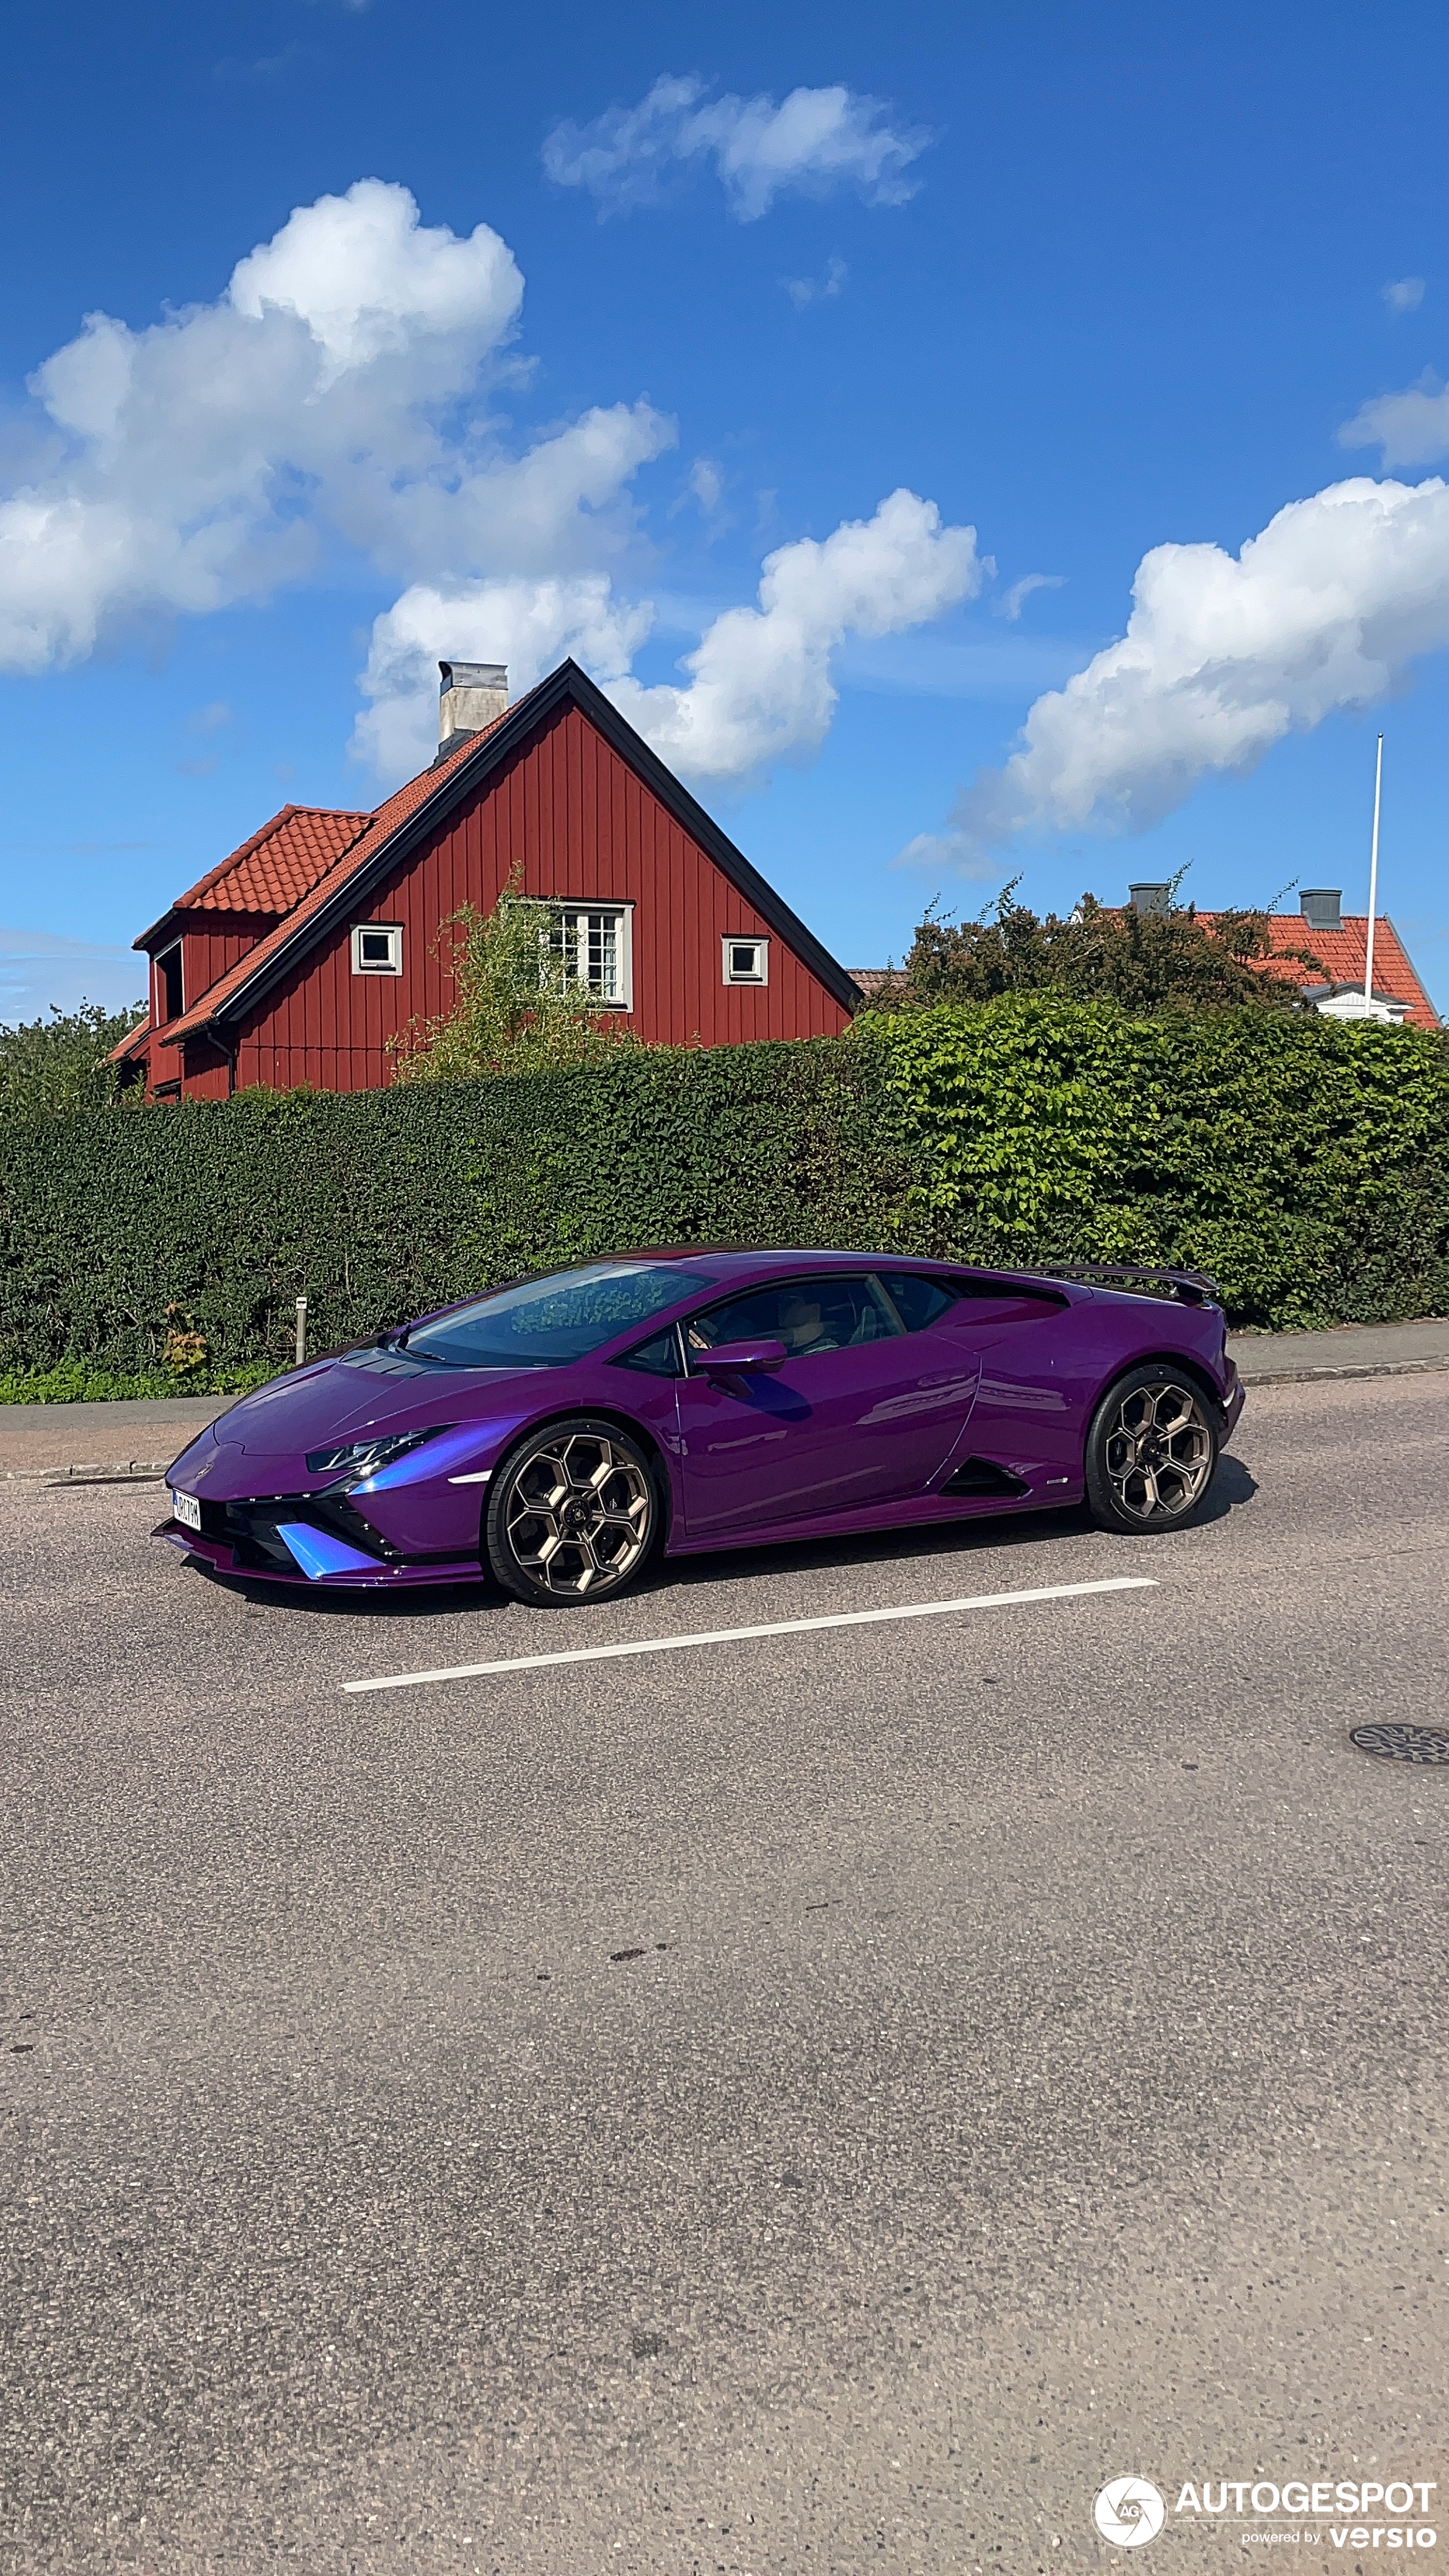 A purple Huracán Tecnica shows up in Båstad